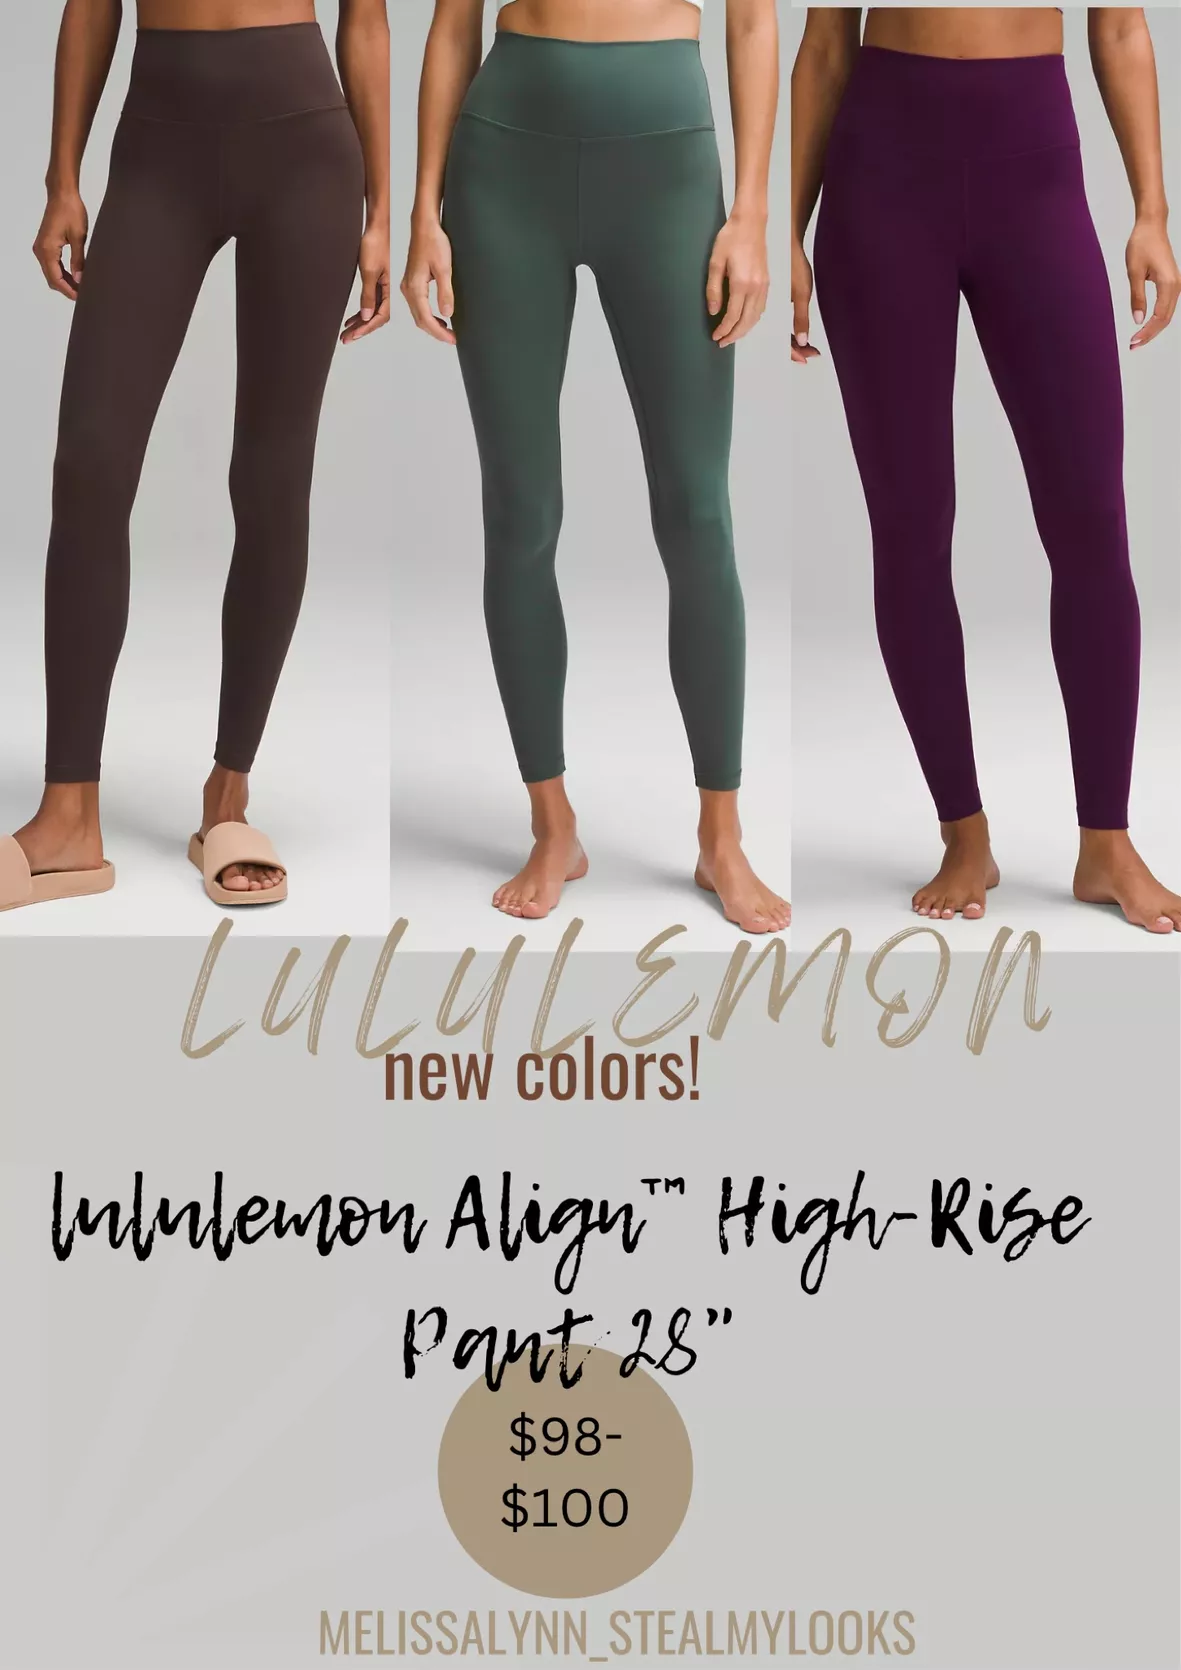 lululemon Align™ High-Rise Pant 28, Tights